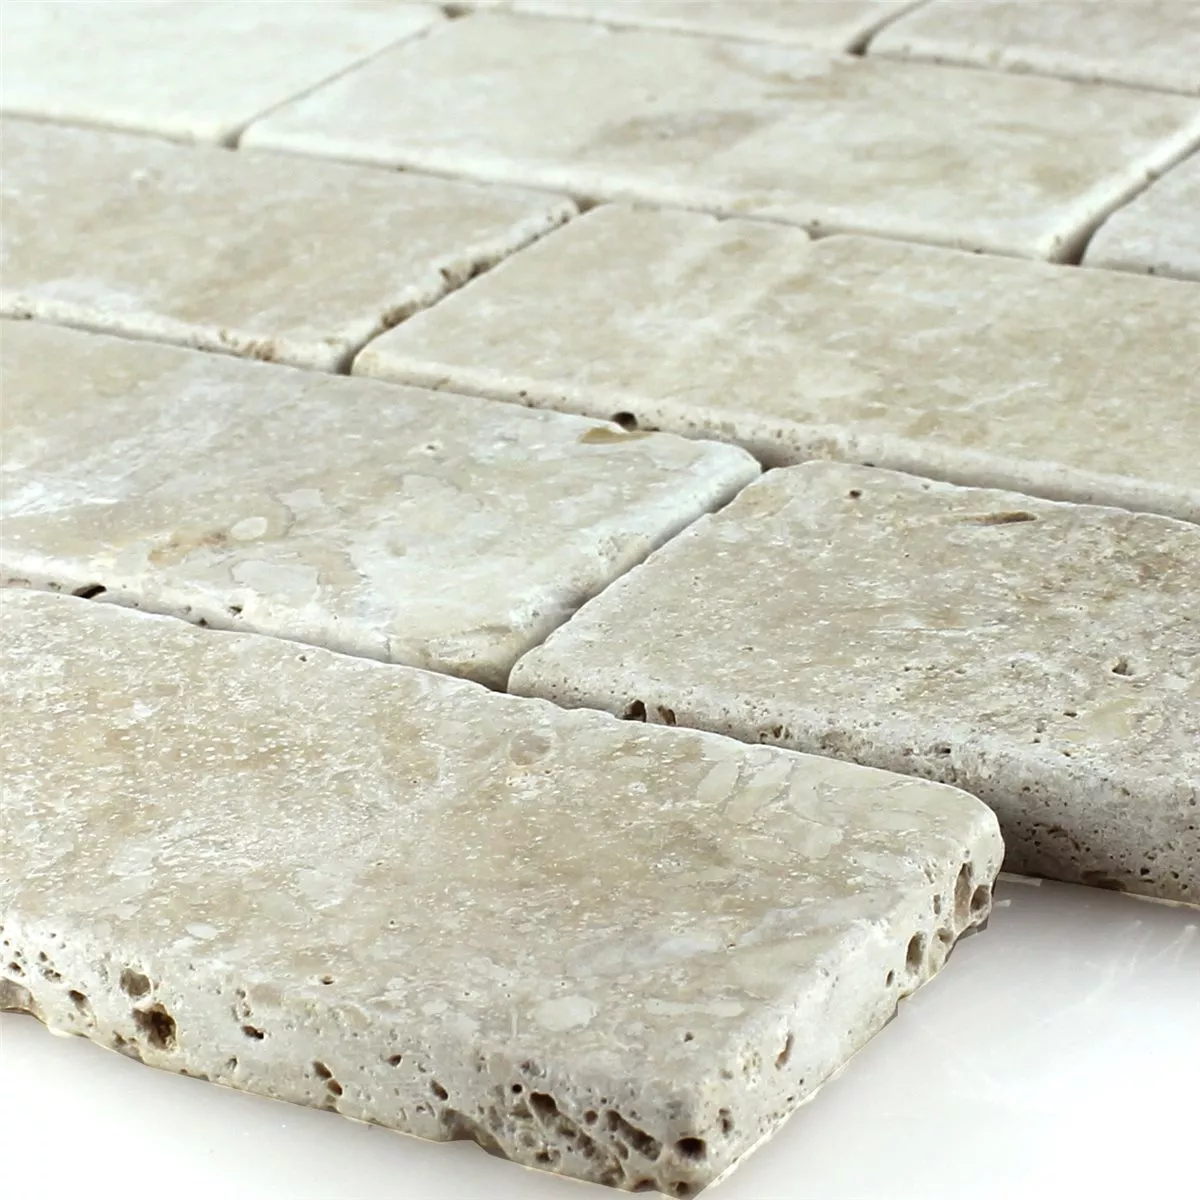 Travertin Mosaikfliese Bugio Chiaro Brick